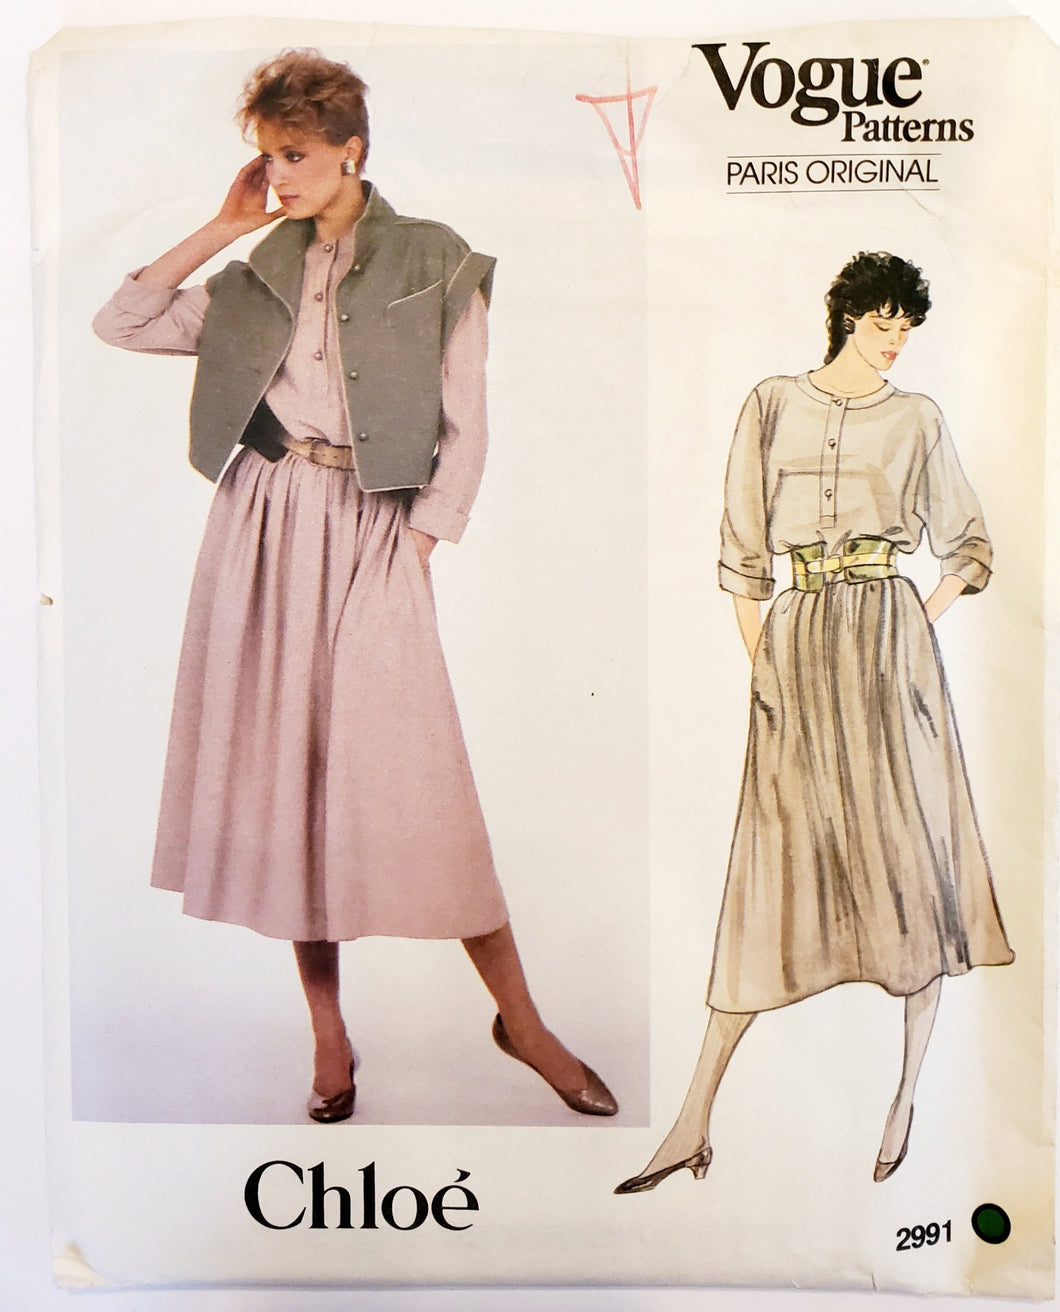 Vogue Pattern 2991, Paris Original Chloe, Skirt and Top Size 12, Vintage